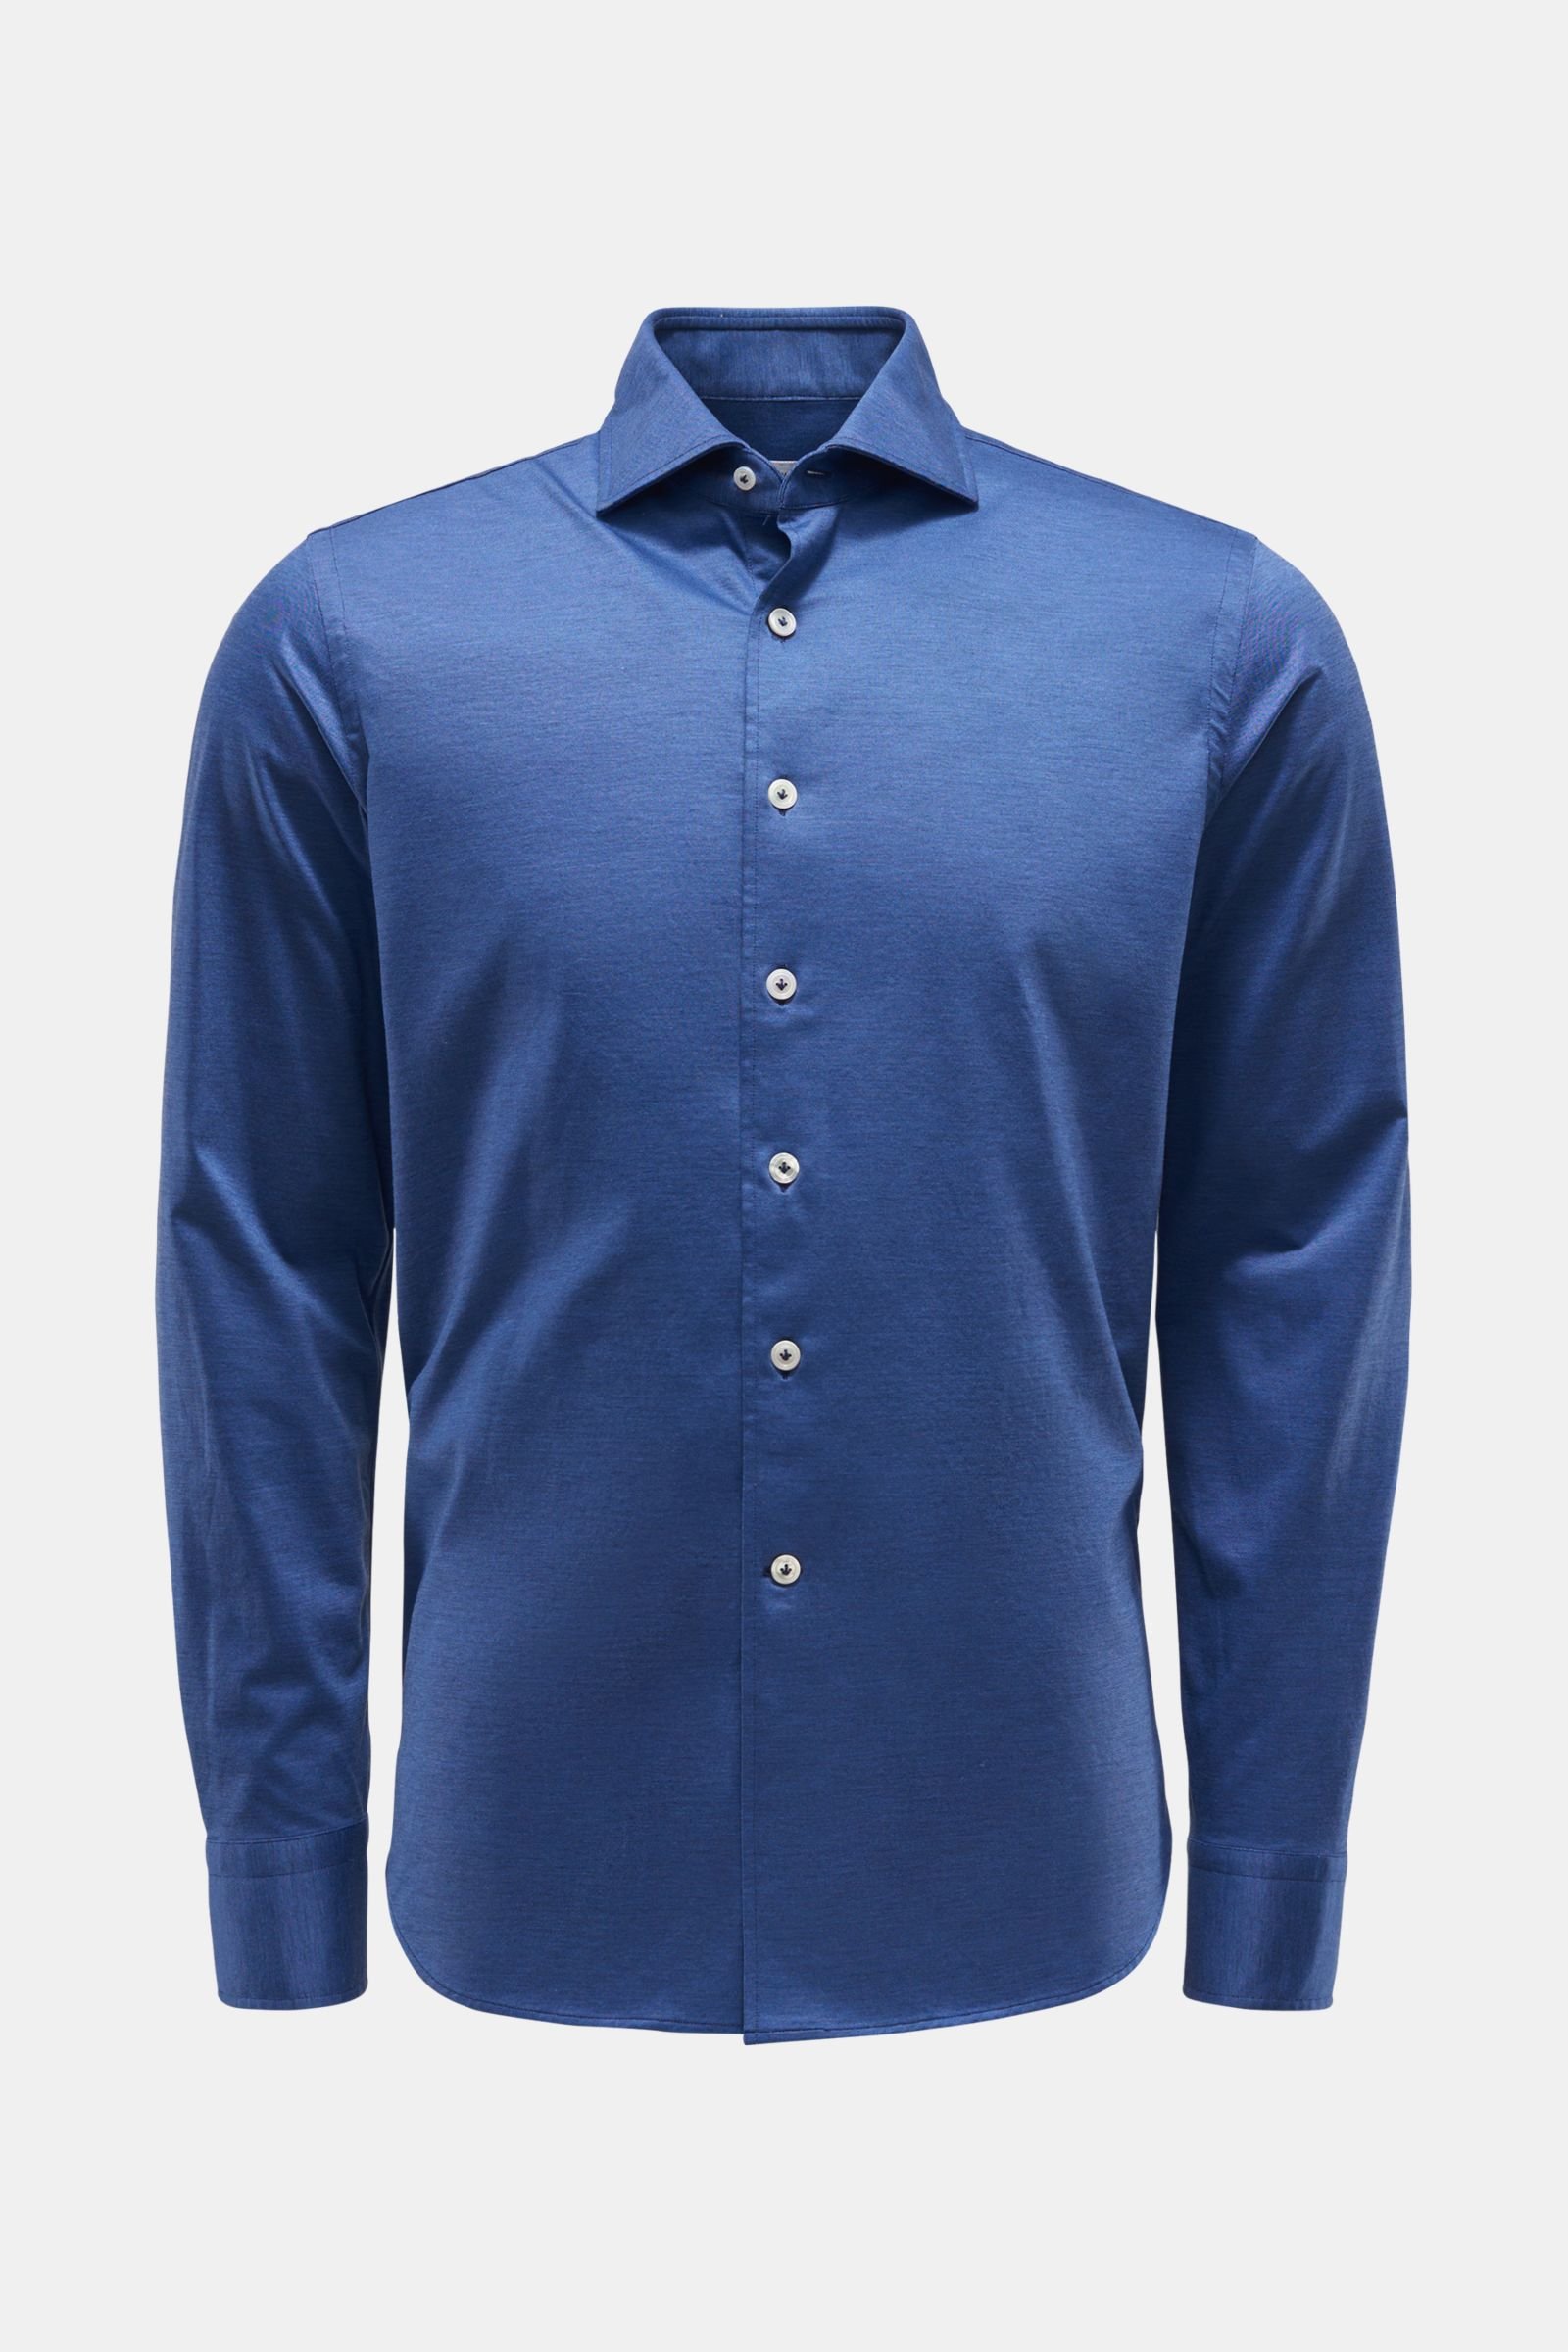 Jersey shirt shark collar dark blue